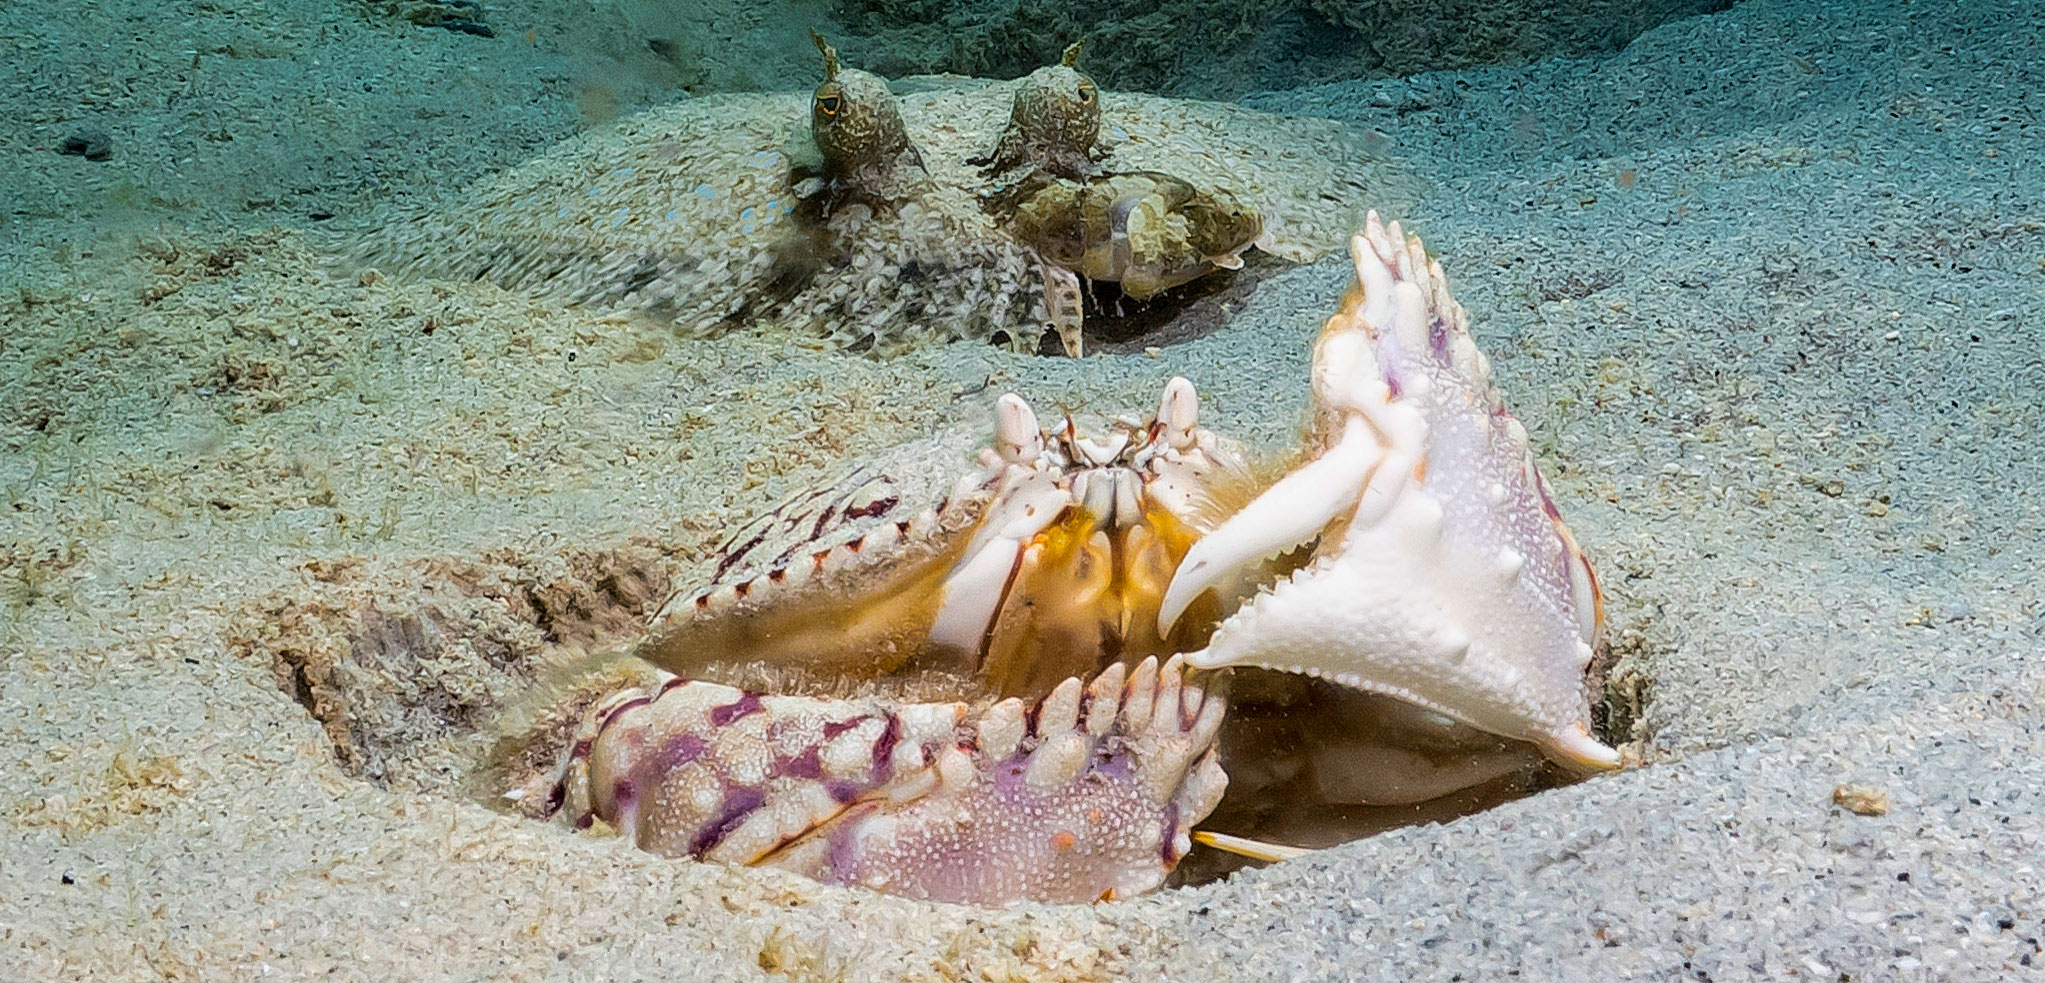 Flounder following a box crab